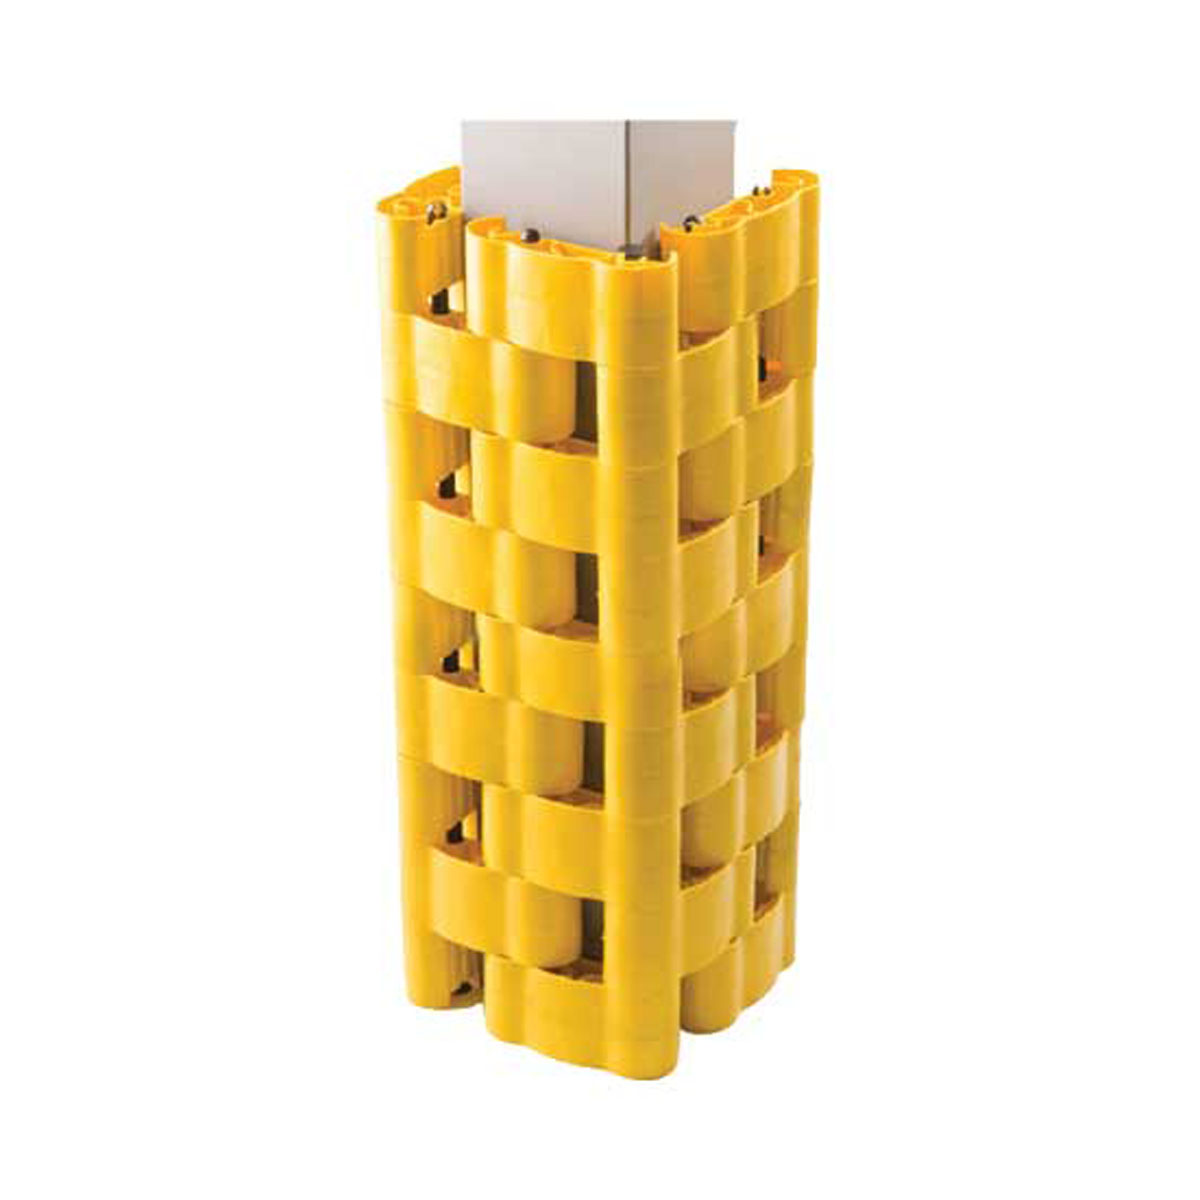 Column Protector | Plastic Modular Column Guard